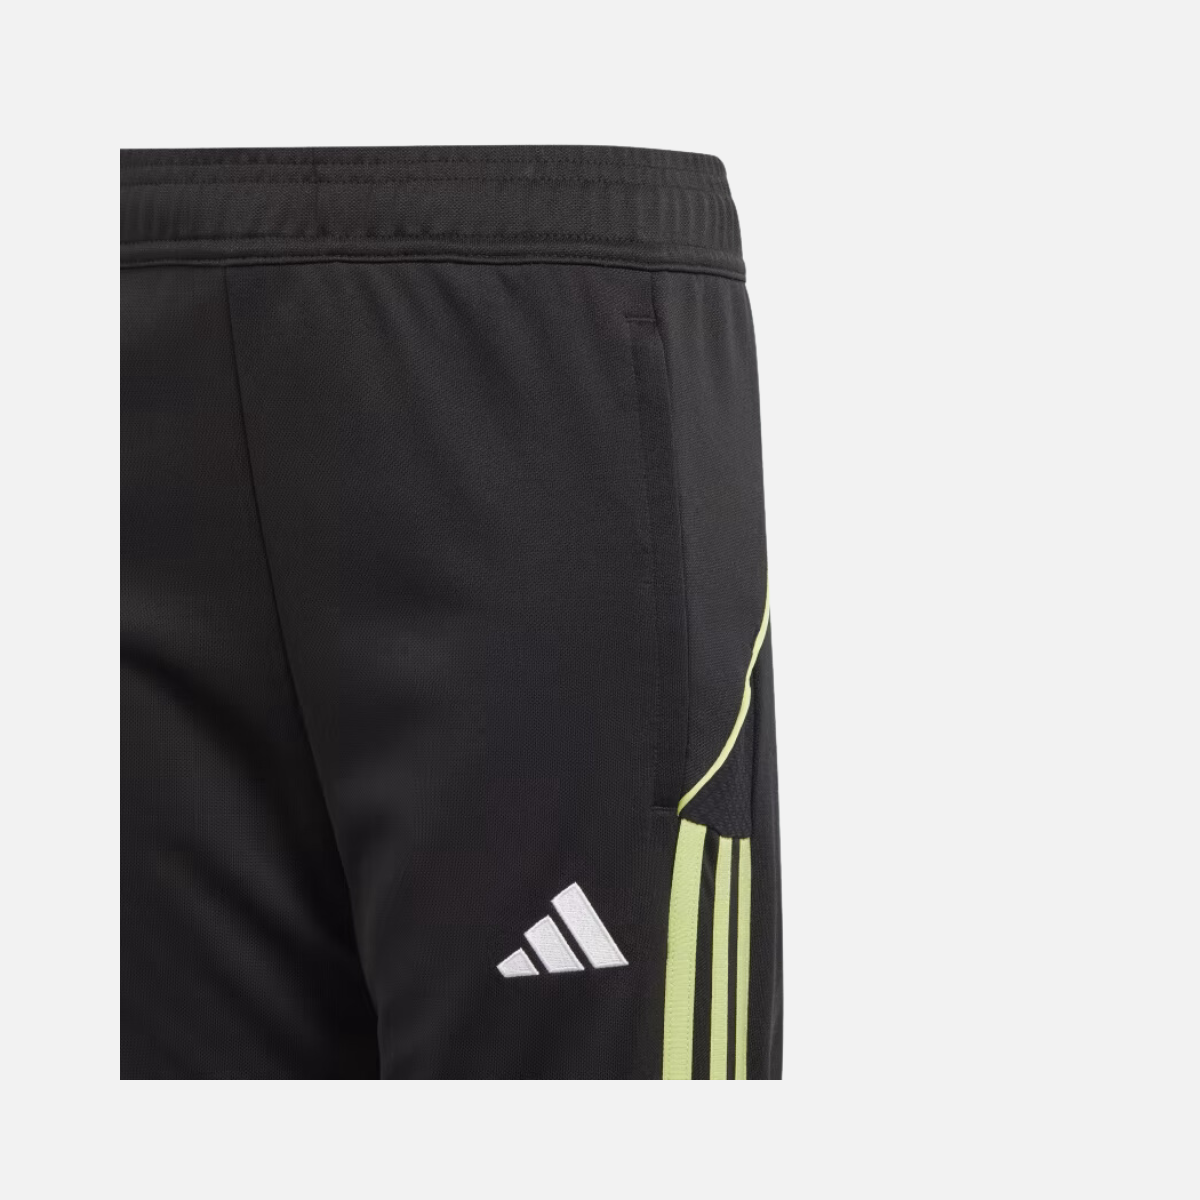 Adidas Tiro 23 League Kids Unisex Training Pants (7-16 Years) -Black / Pulse Lime